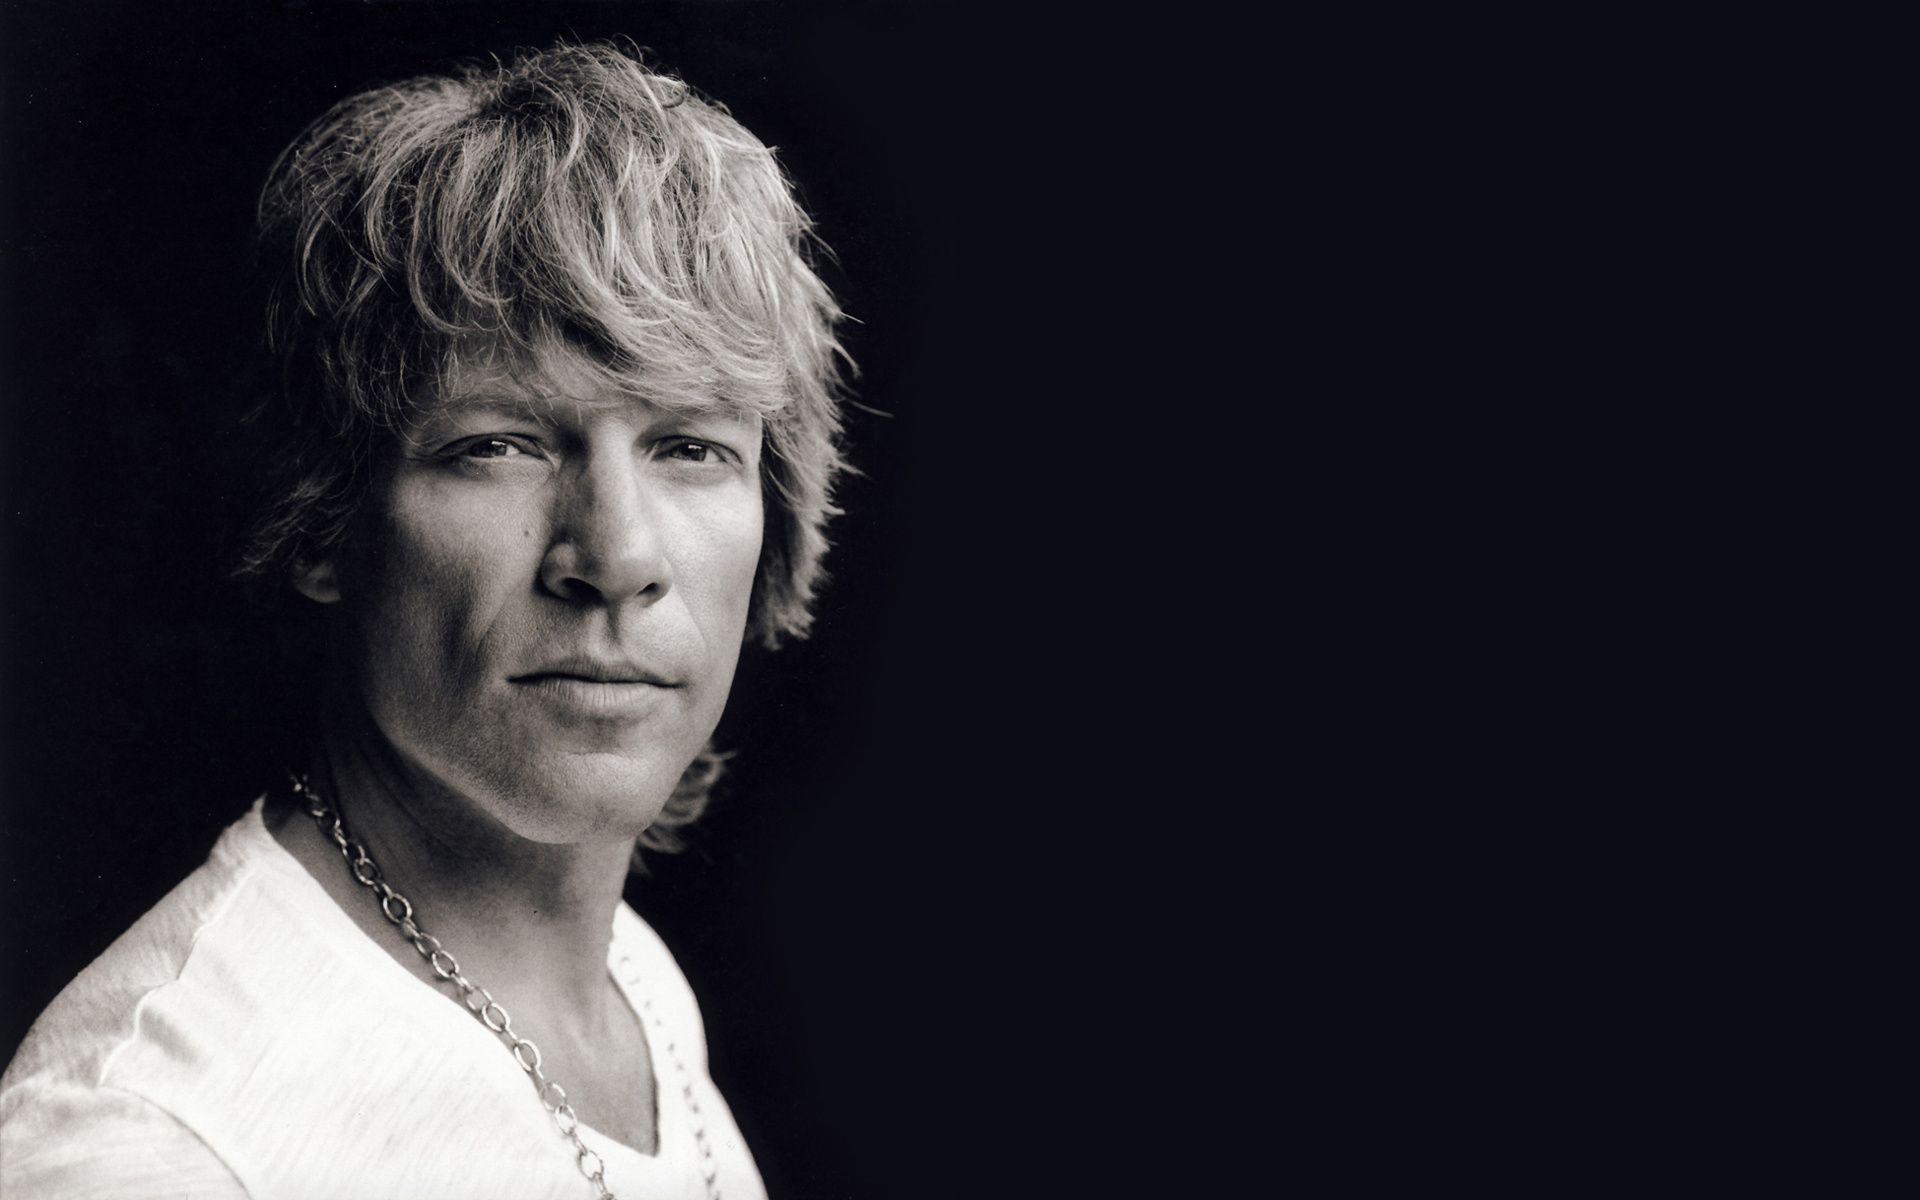 Bon Jovi'S Birthday